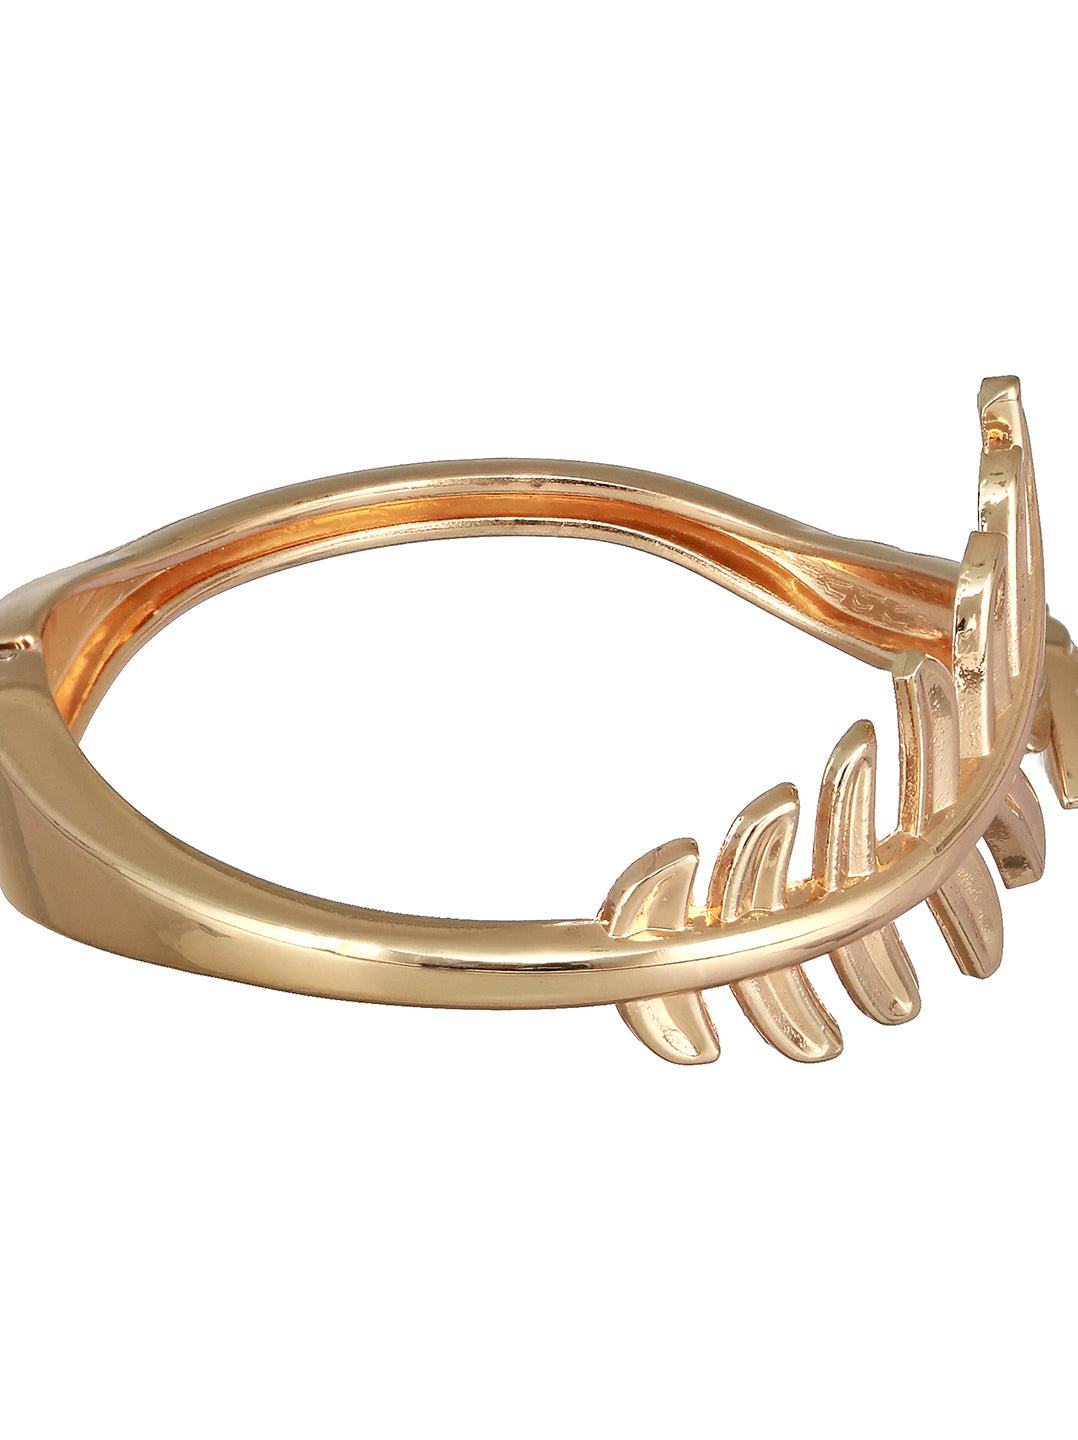 JAZZ AND SIZZLE Gold-Plated American Diamond Studded LEAF SHAPED Cuff Bracelet - Jazzandsizzle